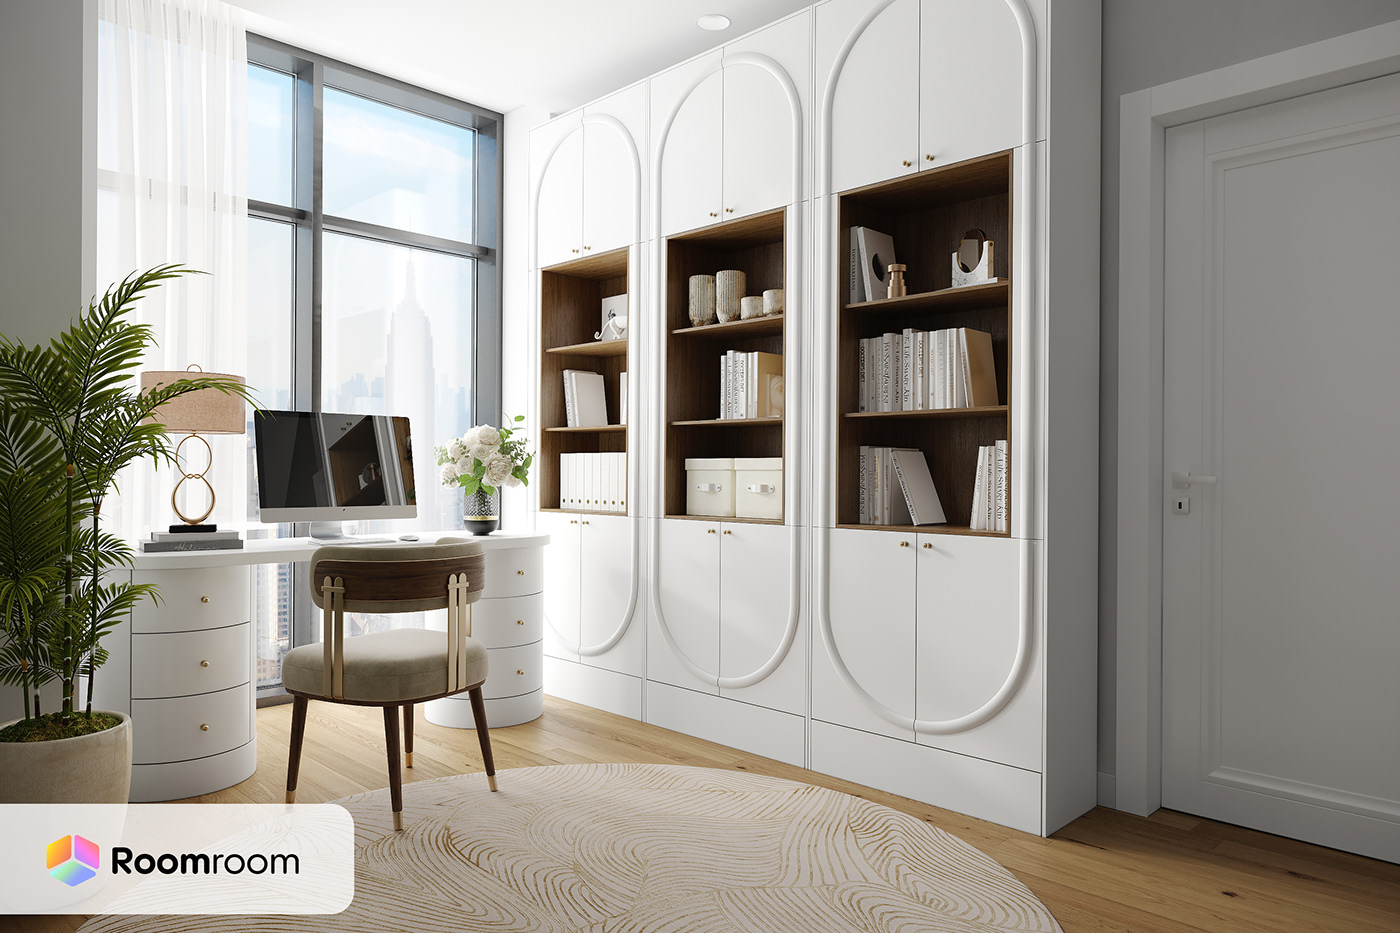 3ds max 3D Rendering 3D Visualization interior design  Render furniture design New York Photography  realtor